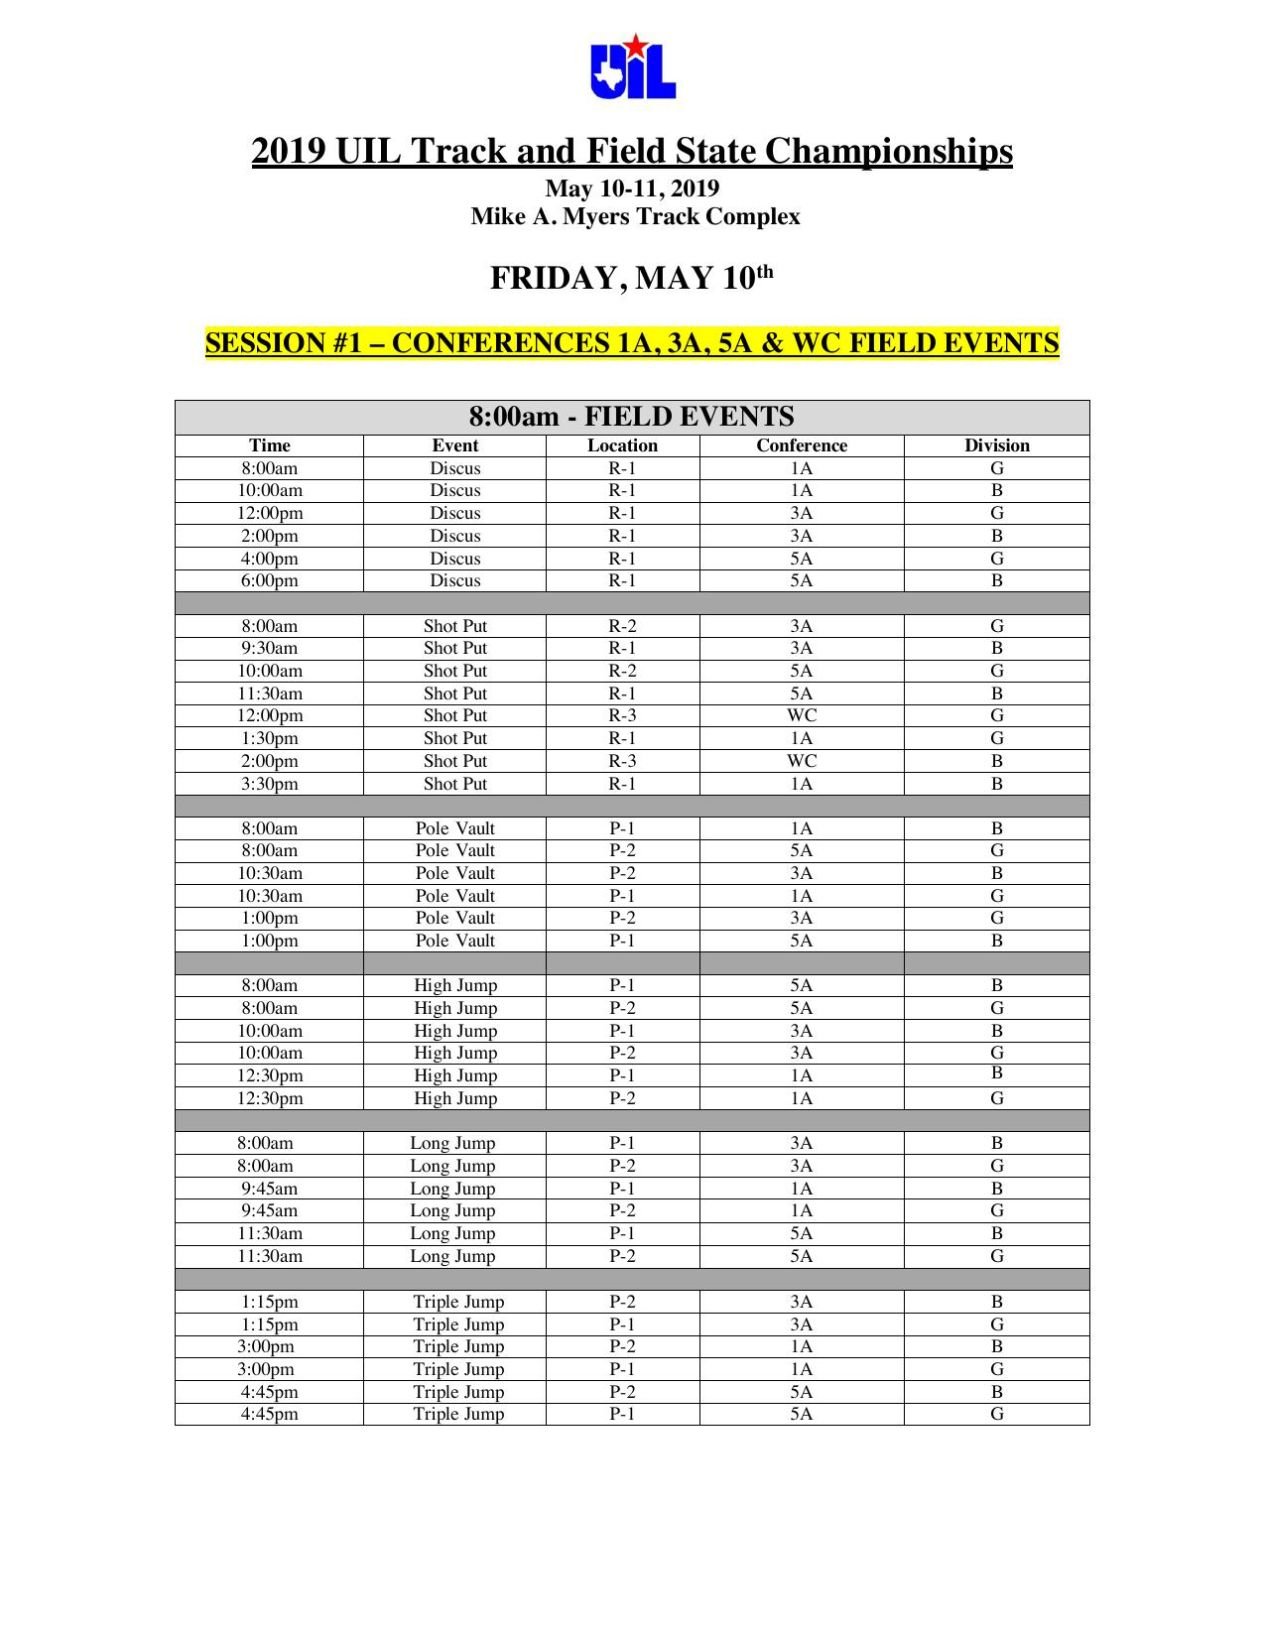 State Track Meet Schedule